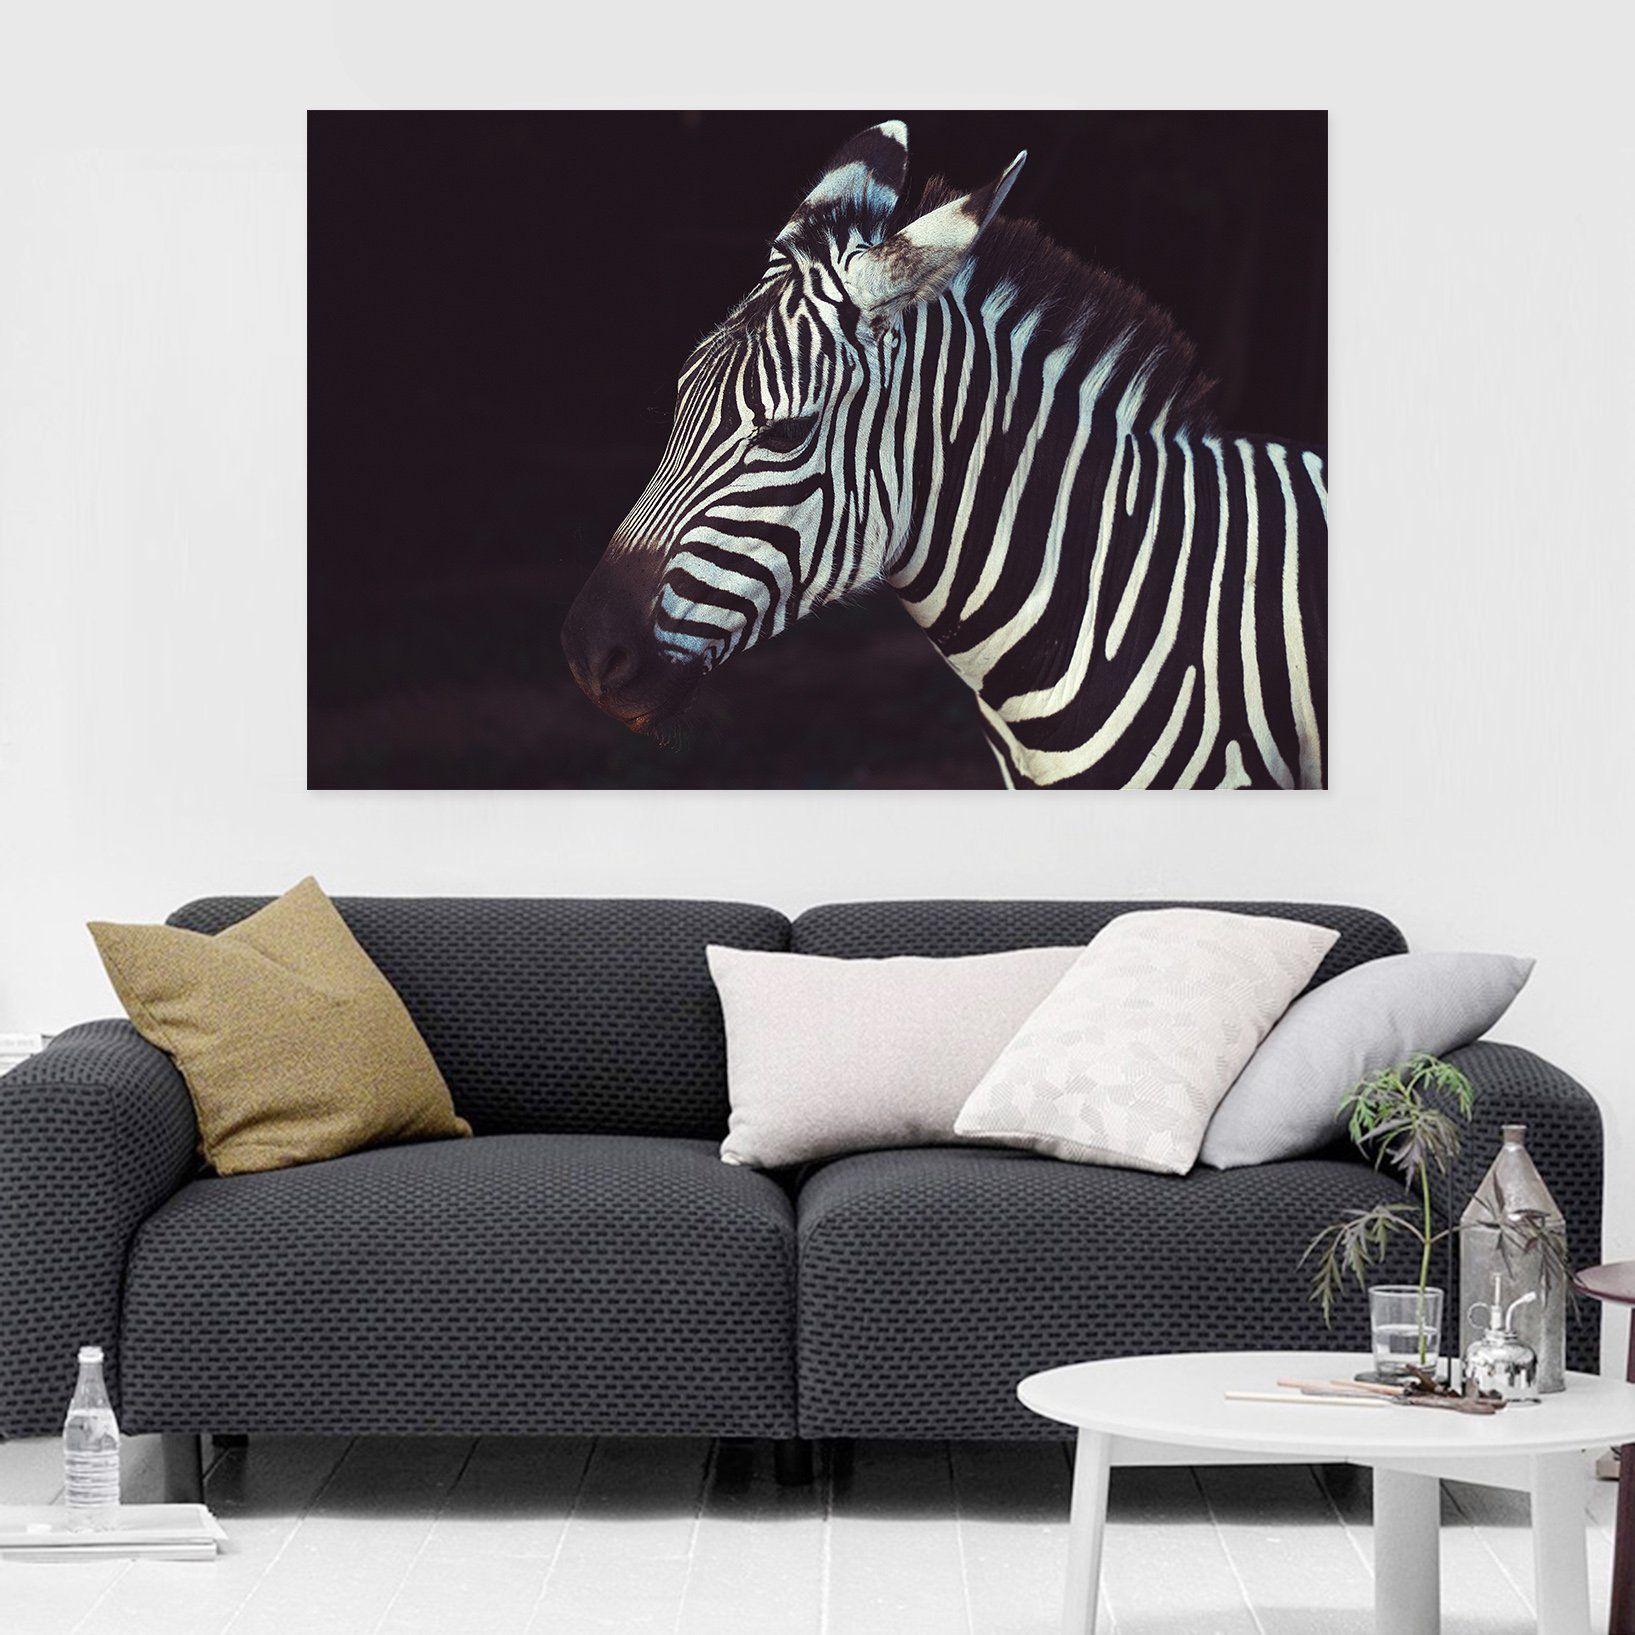 3D Zebra 13 Animal Wall Stickers Wallpaper AJ Wallpaper 2 